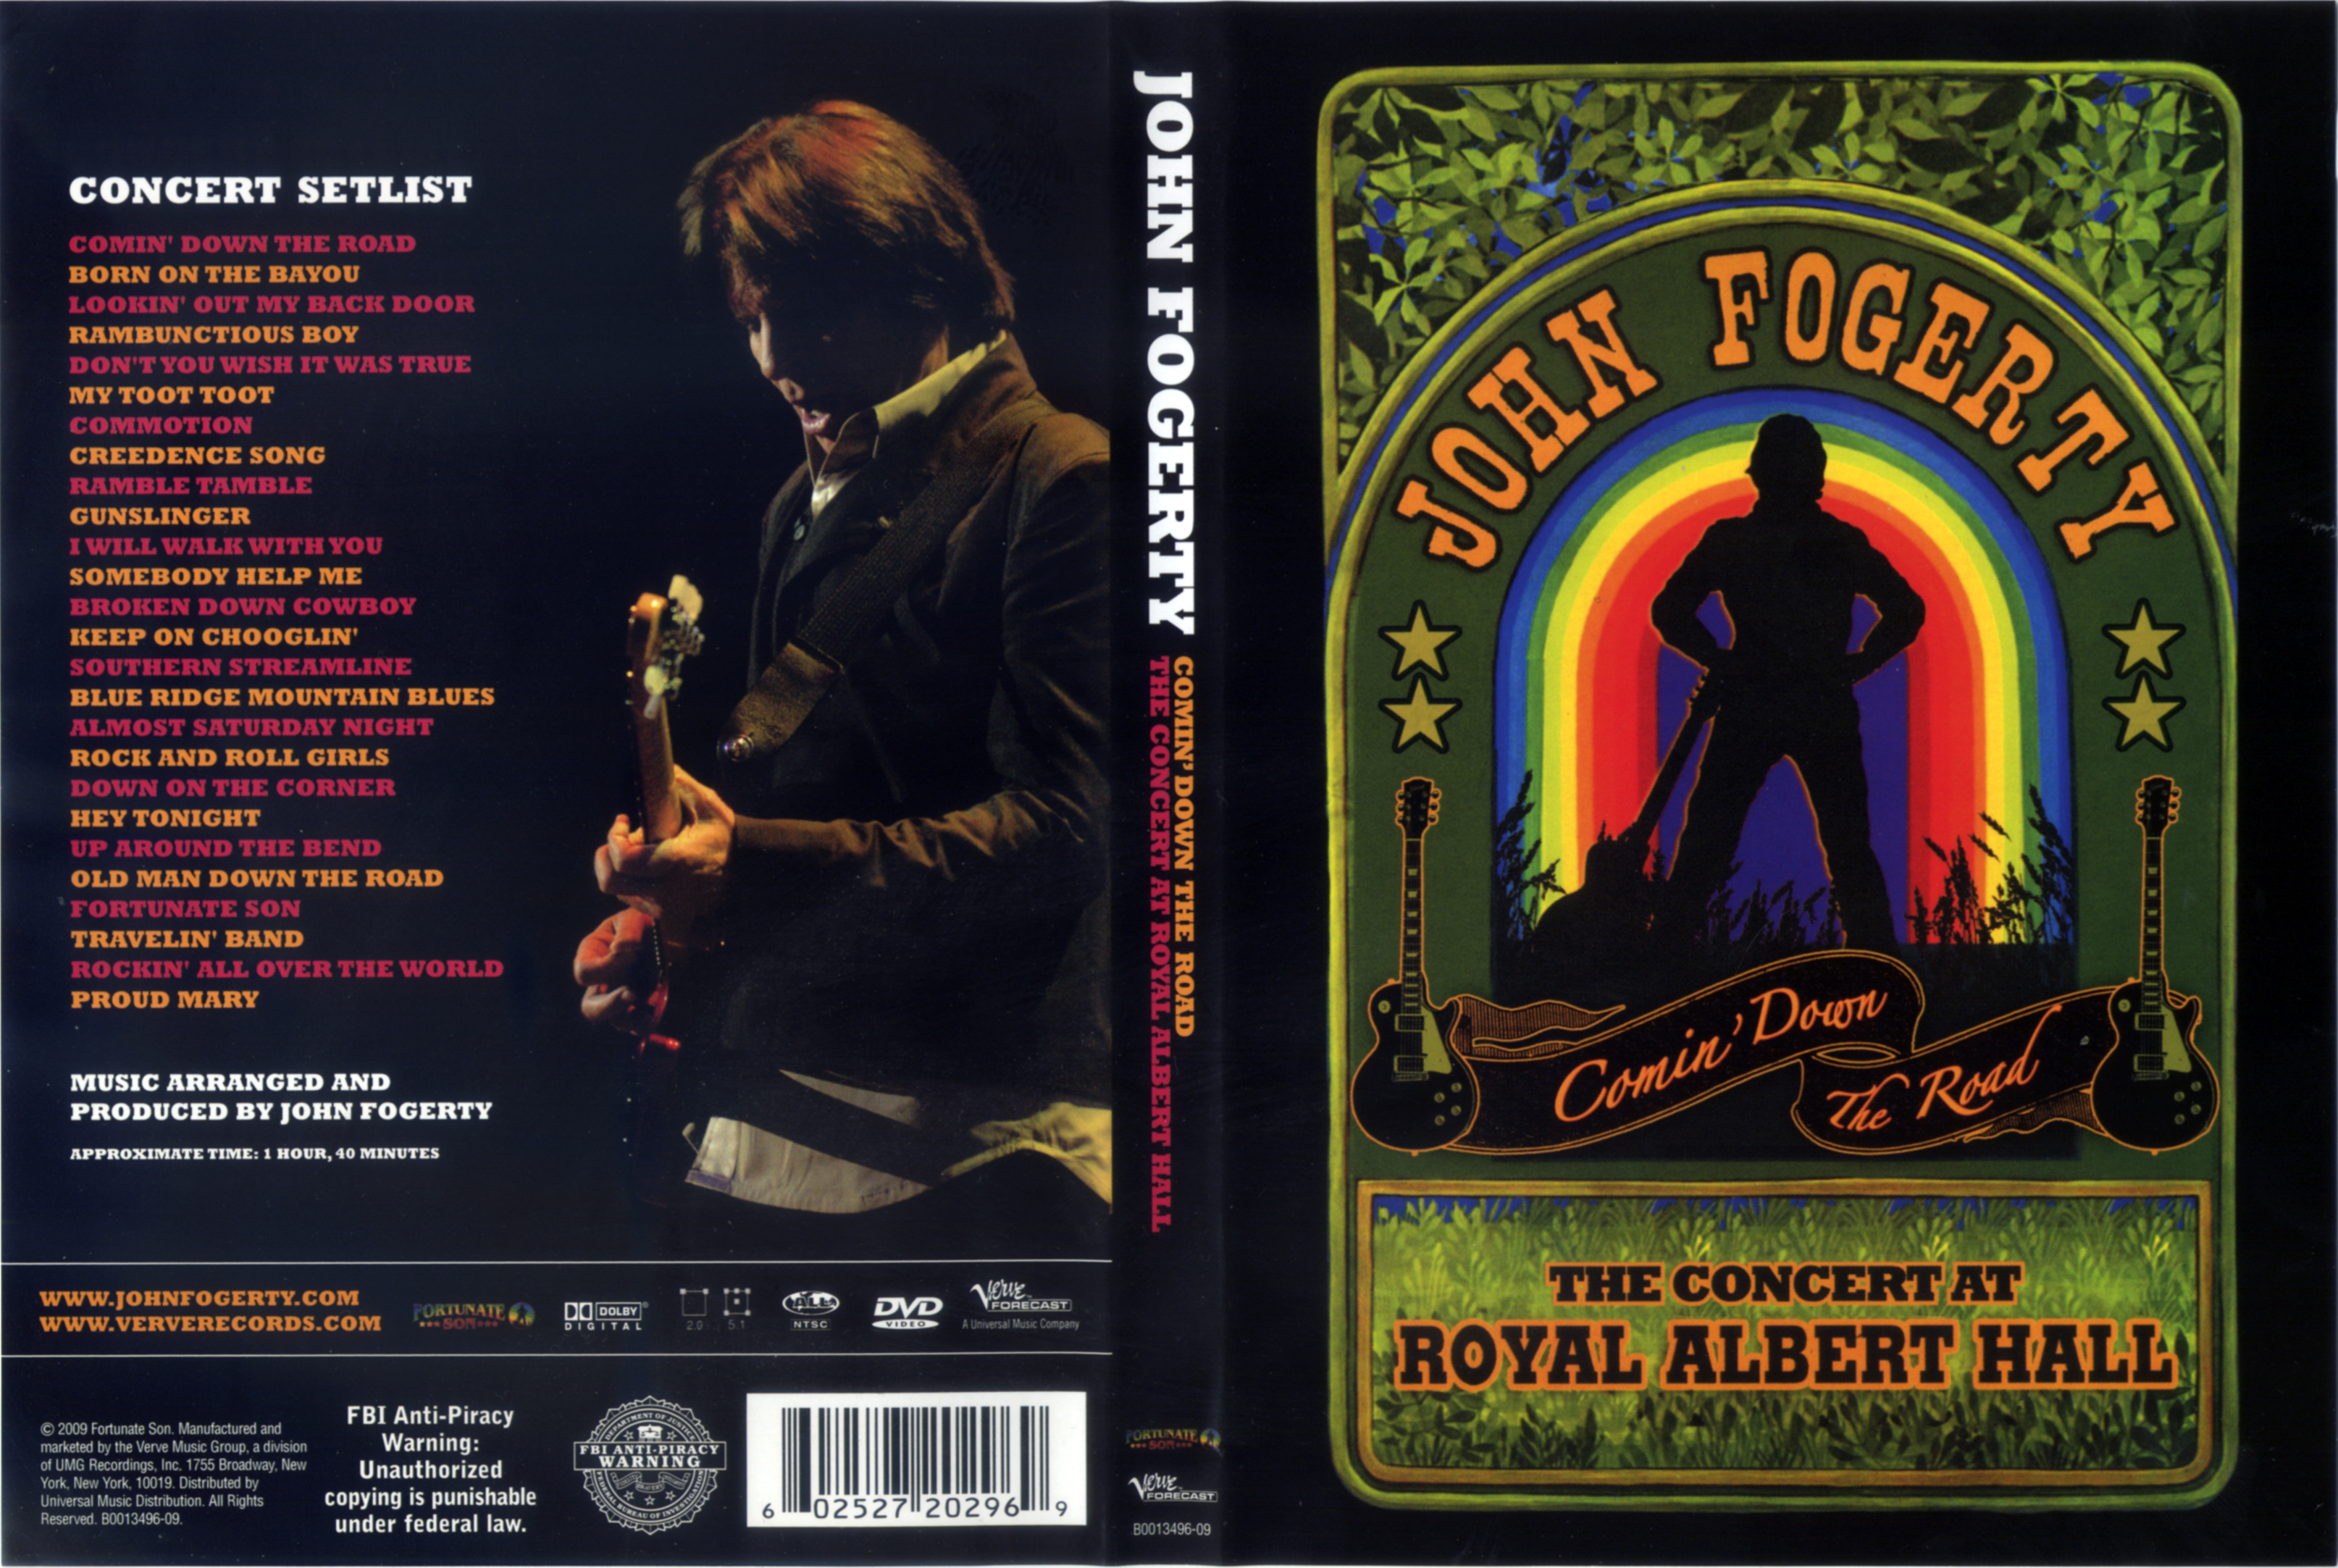 Jaquette DVD John Fogerty - The concert at royal albert hall